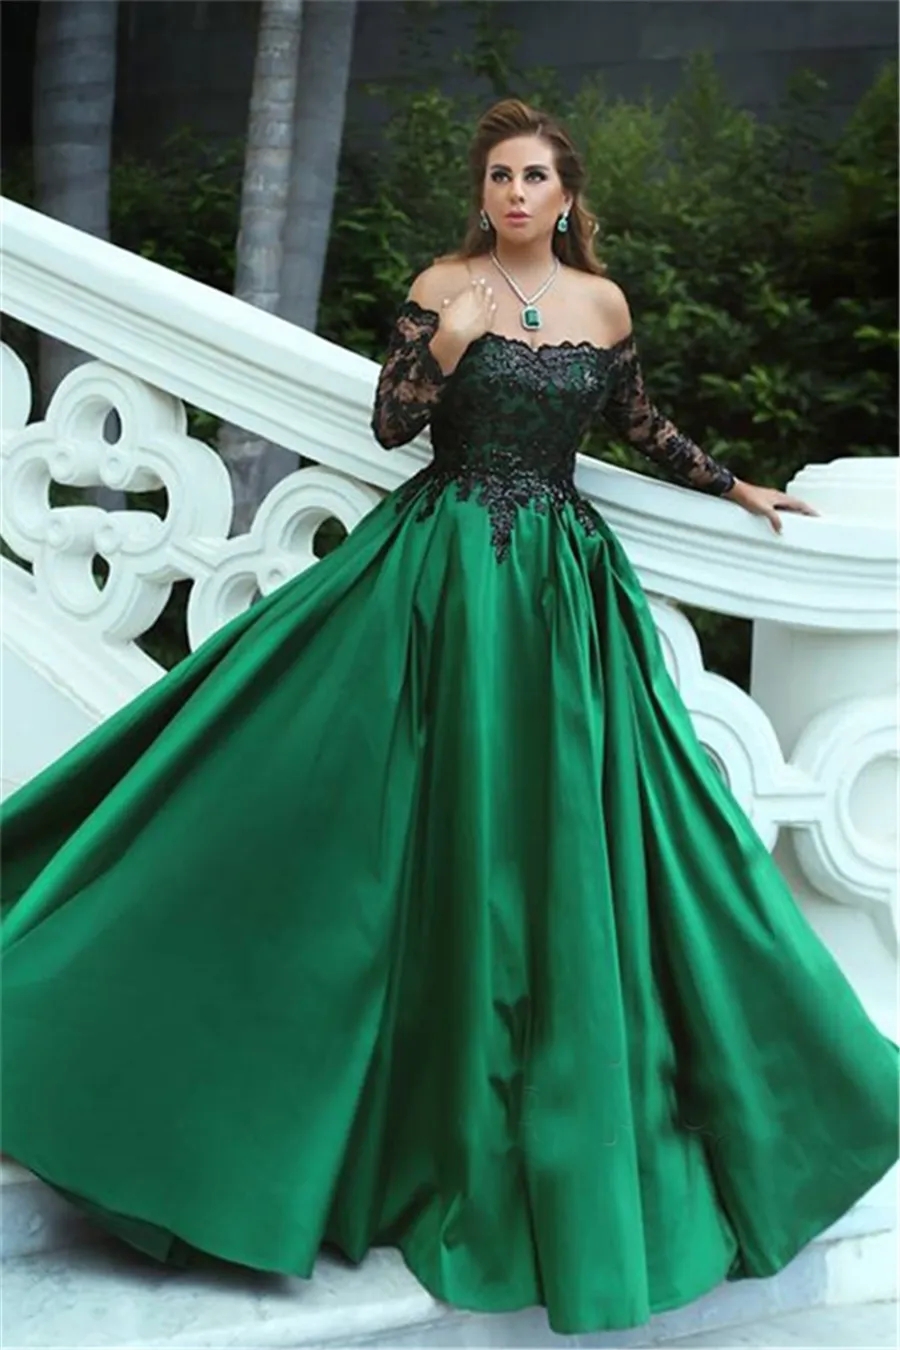 Black-Appliques Sleeves Long Off-the-Shoulder A-Line Elegant Prom Dress Black and Green Long Sleeves Evening Gowns vestido longo festa